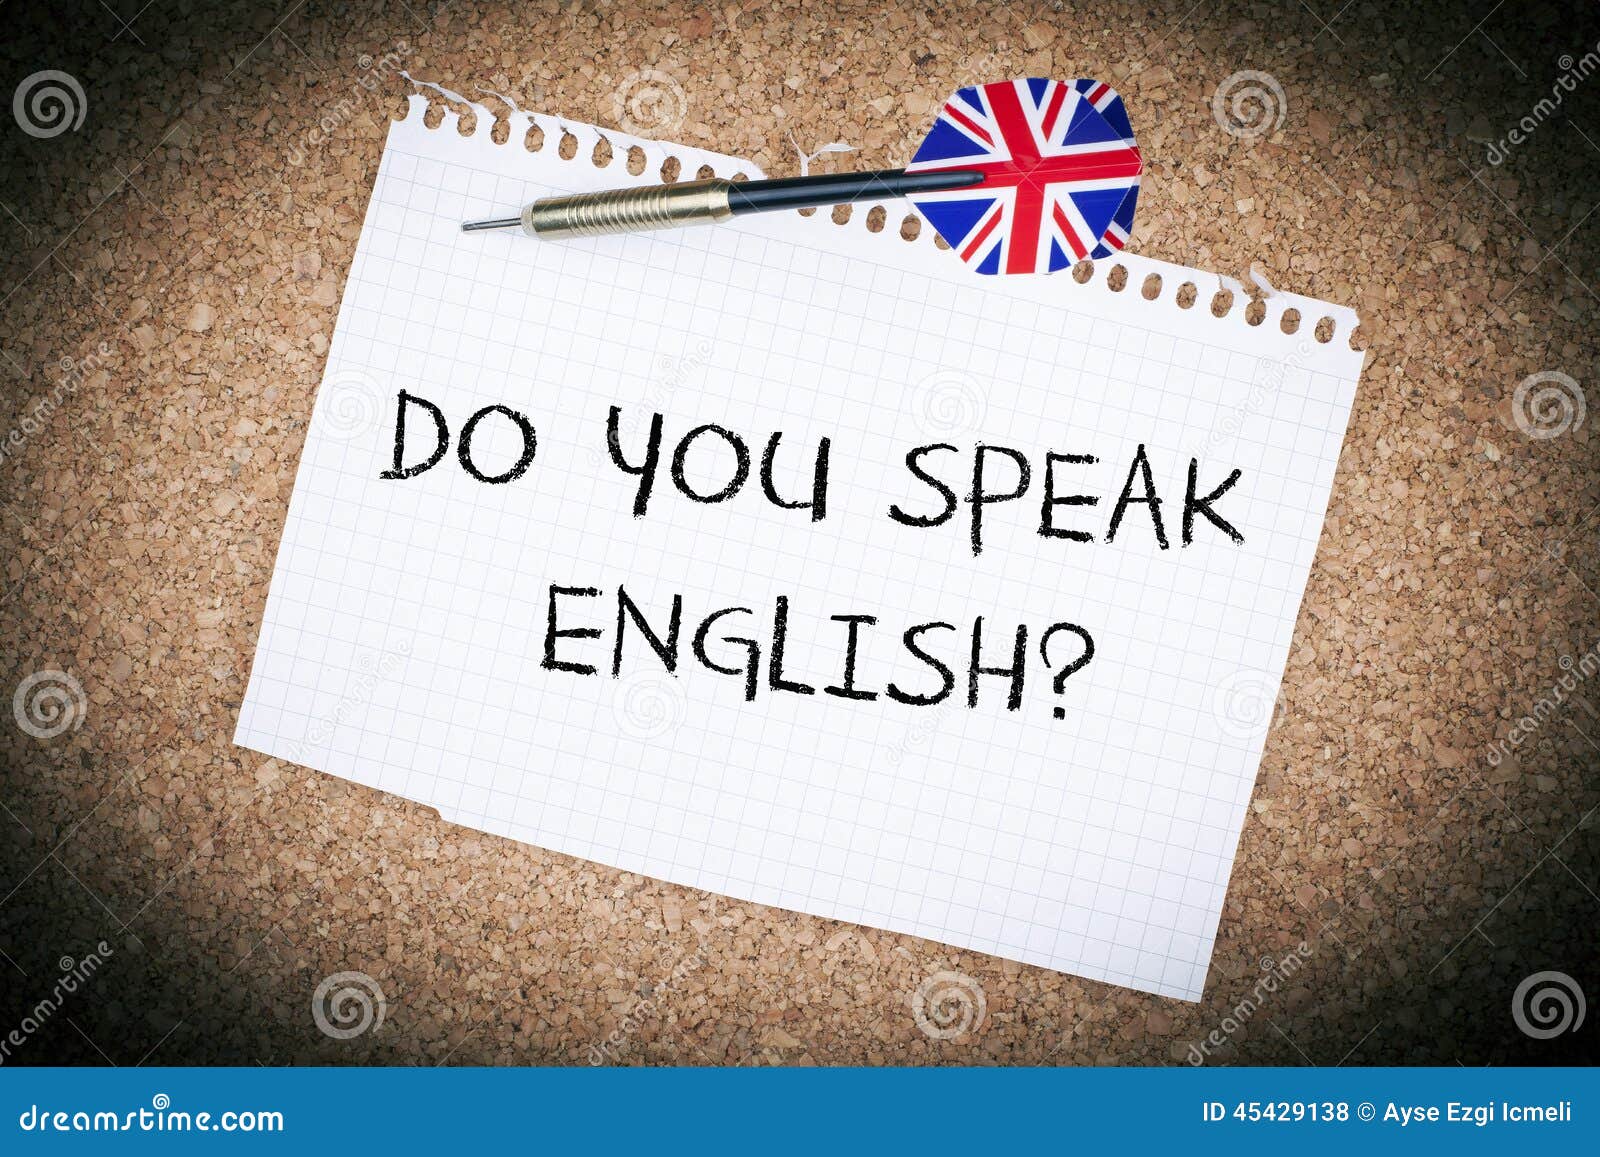 Don t they speak english. Английский do you speak English. Do you speak English картинки. Do you speak English надпись. Плакат do you speak English.